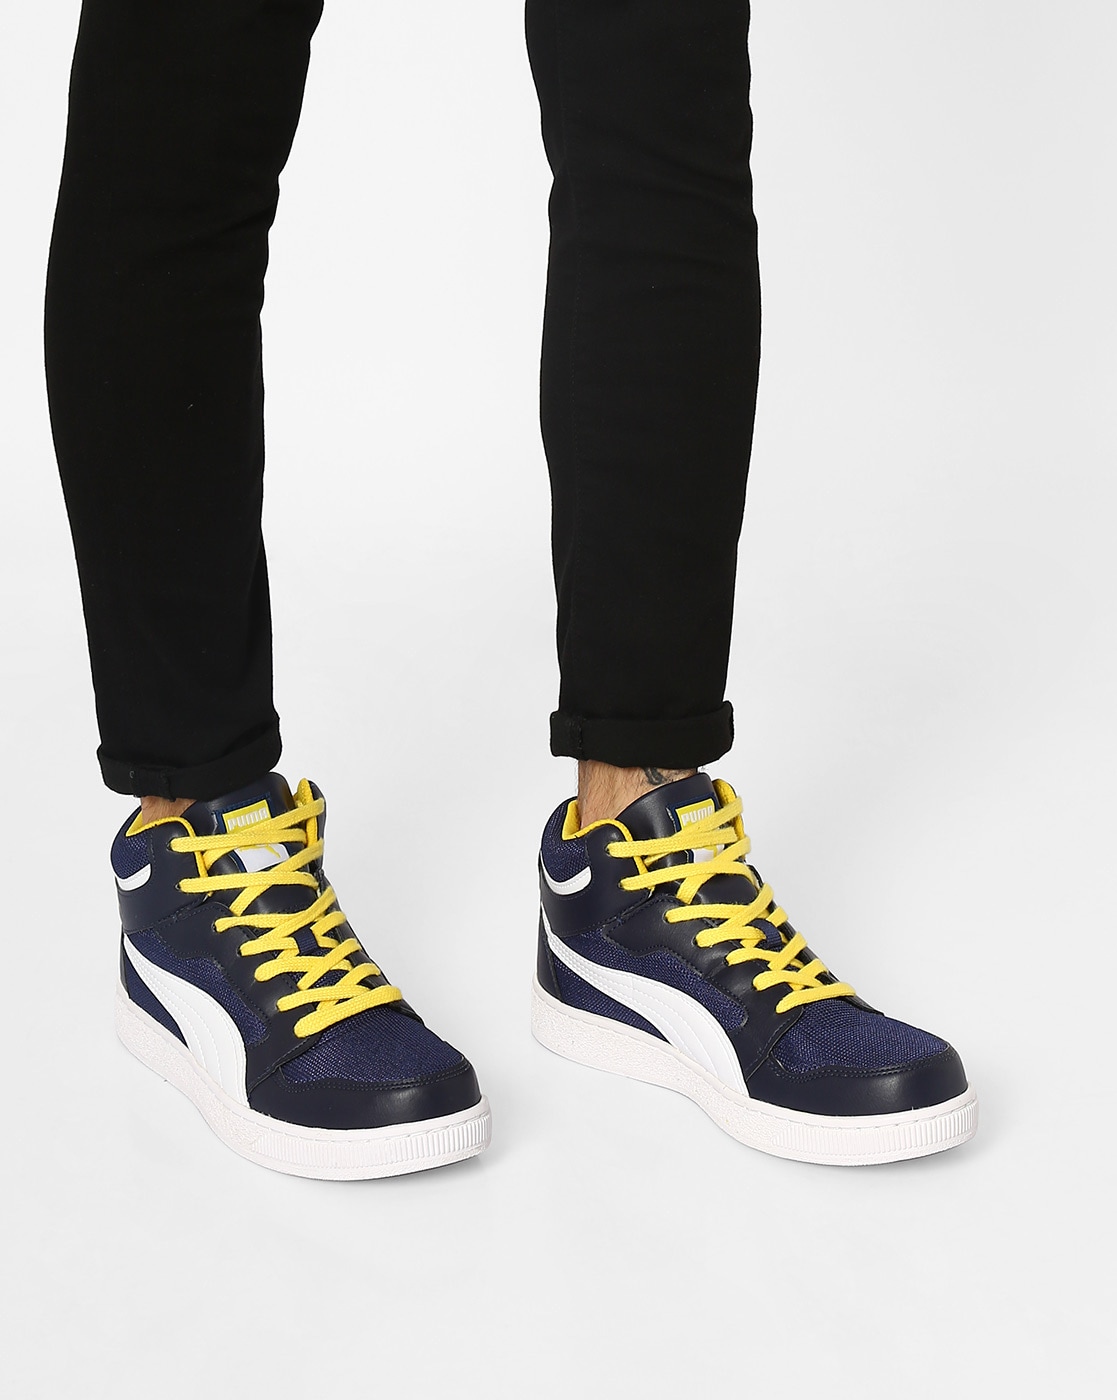 NEW Puma ARCHIVE LITE MID UO Men's Shoes Boots Size US 8.5 | eBay